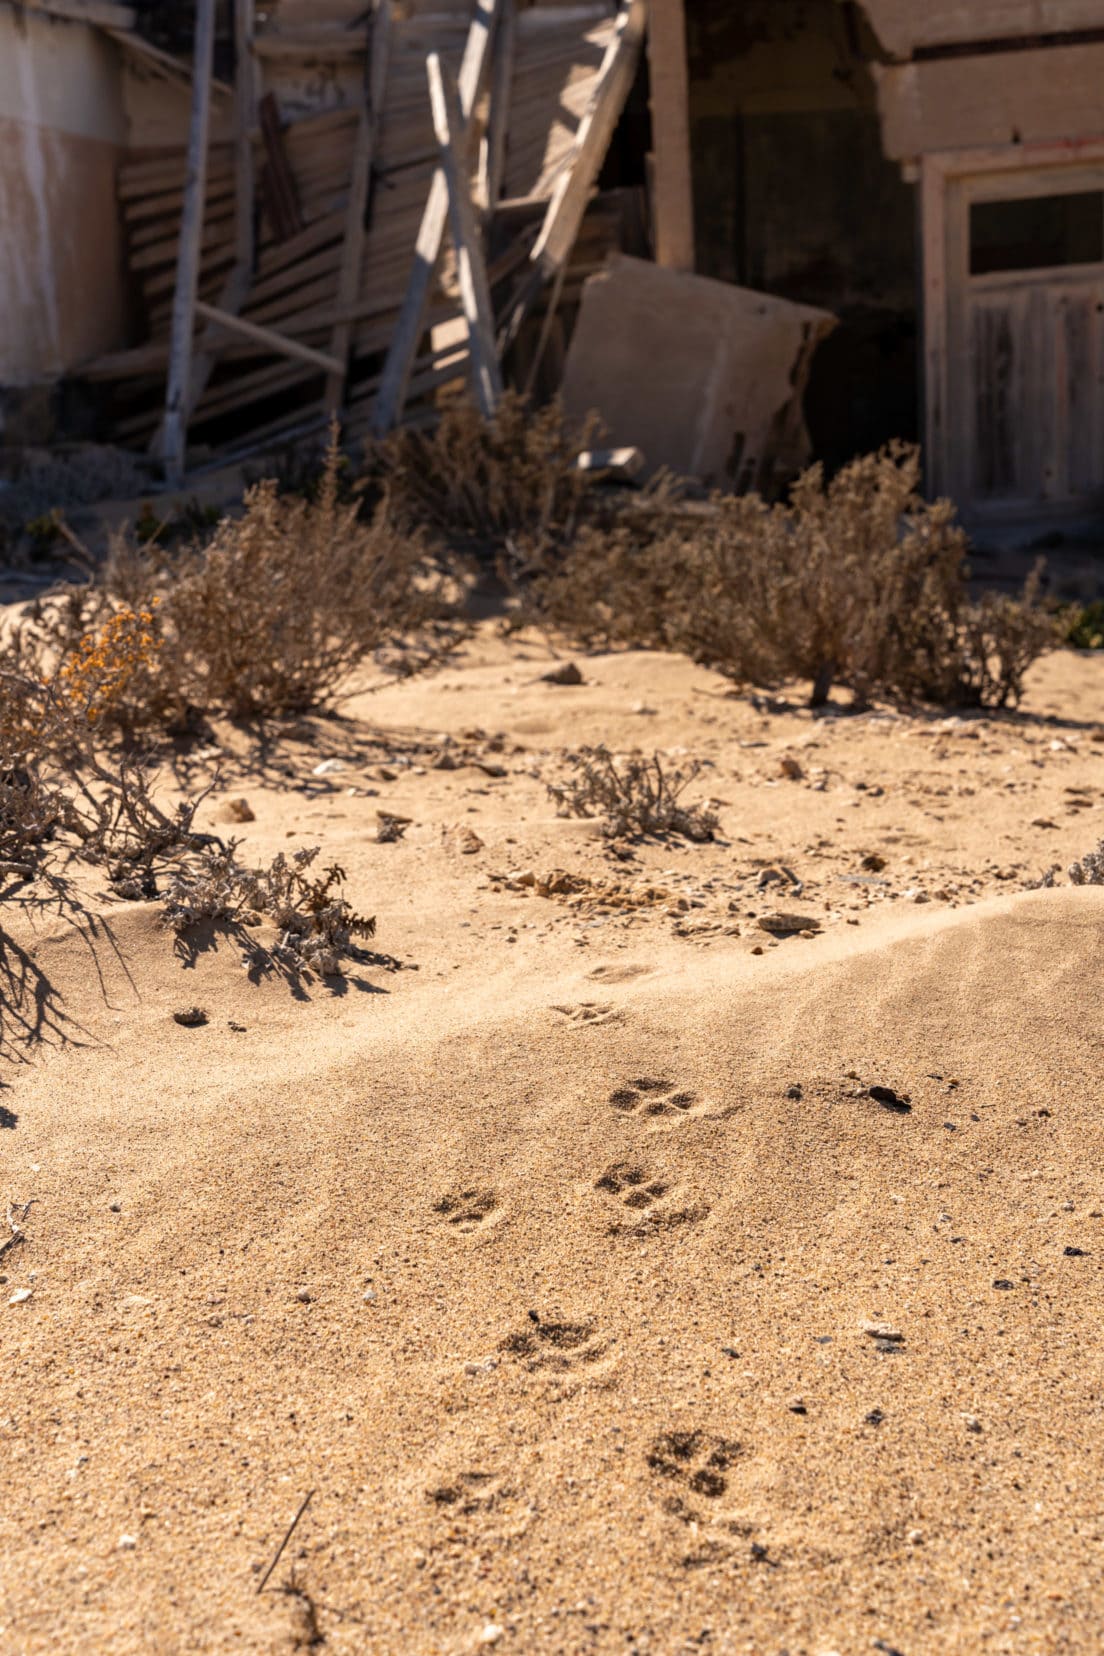 Paw prints in the sand at Kolmanskop